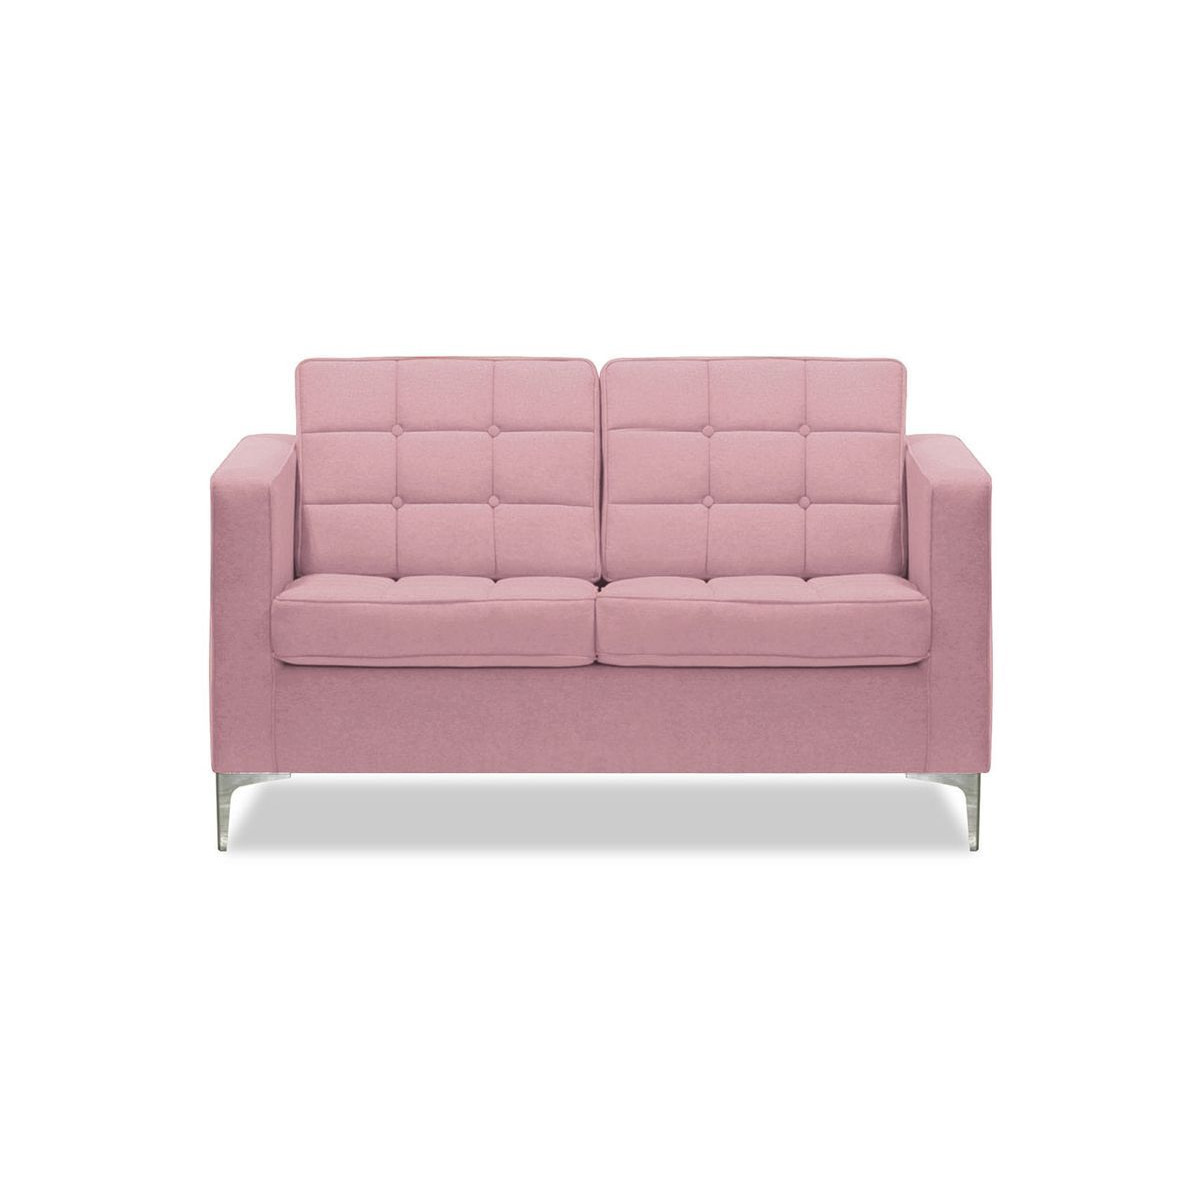 Finn 2 Seater Sofa, pink - image 1